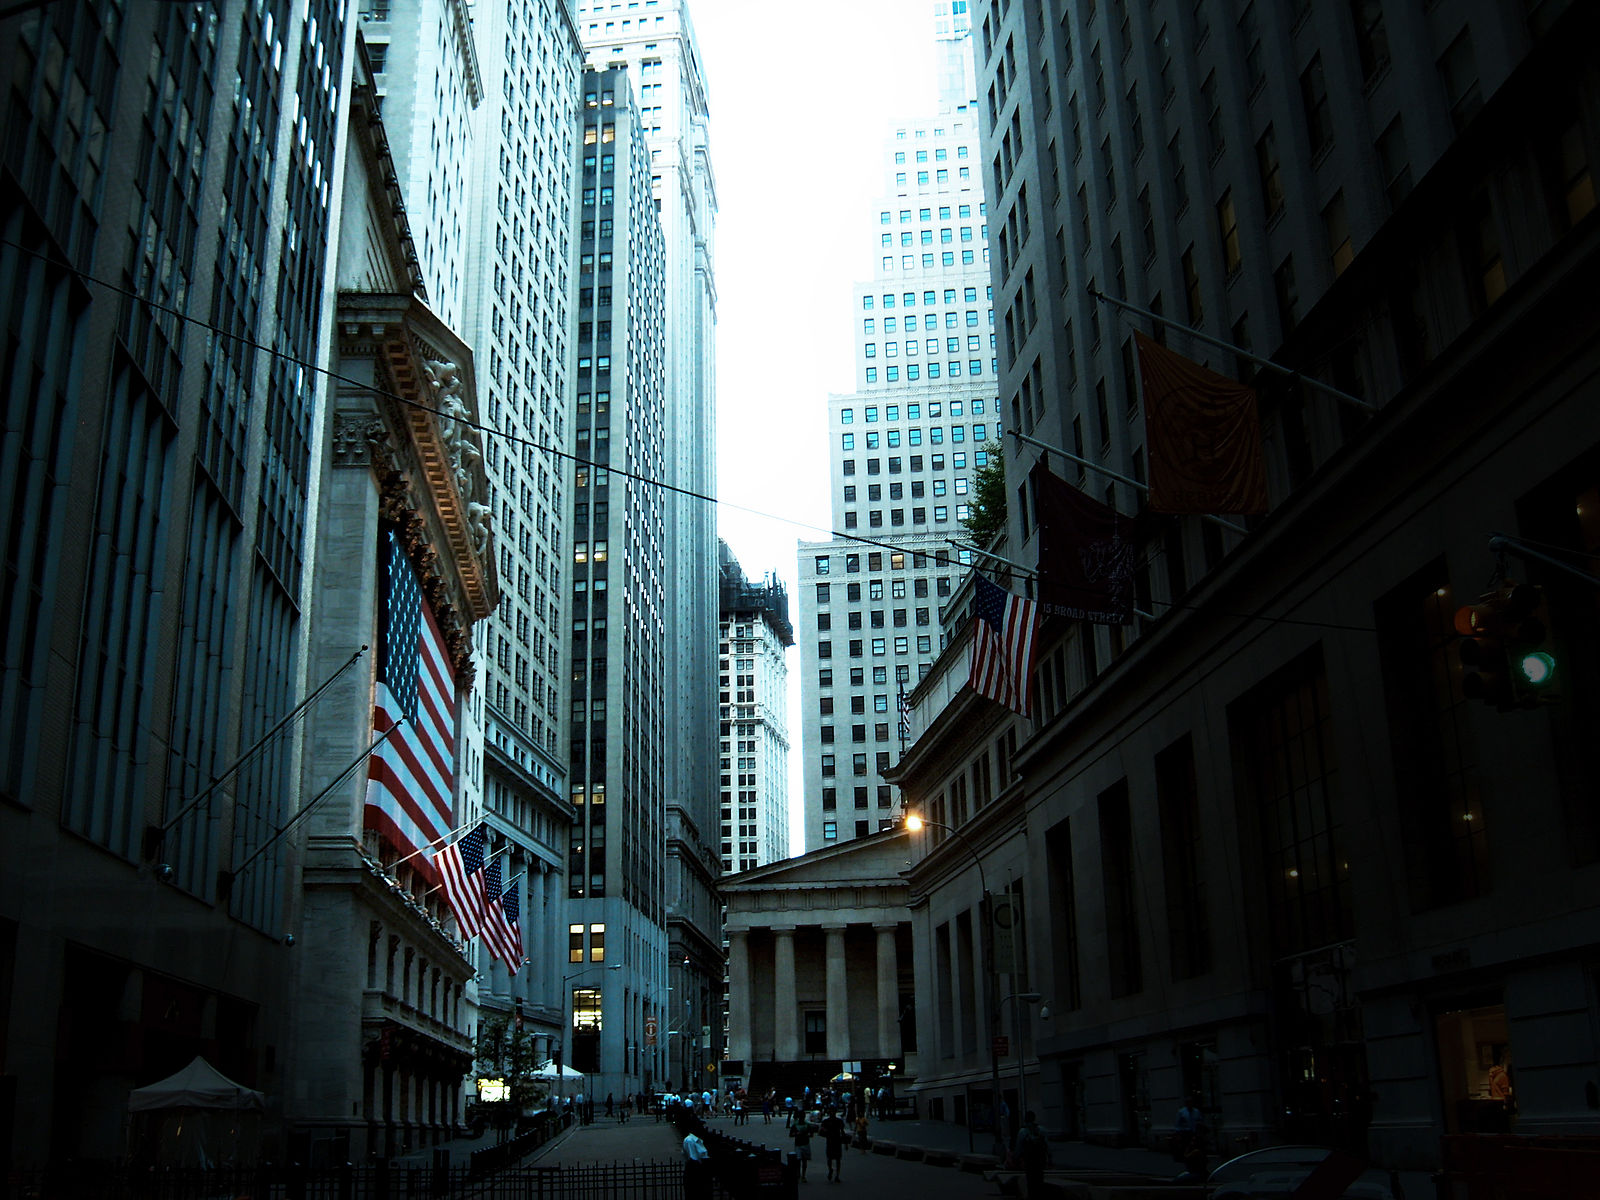 Wall Street, New York City, 2008